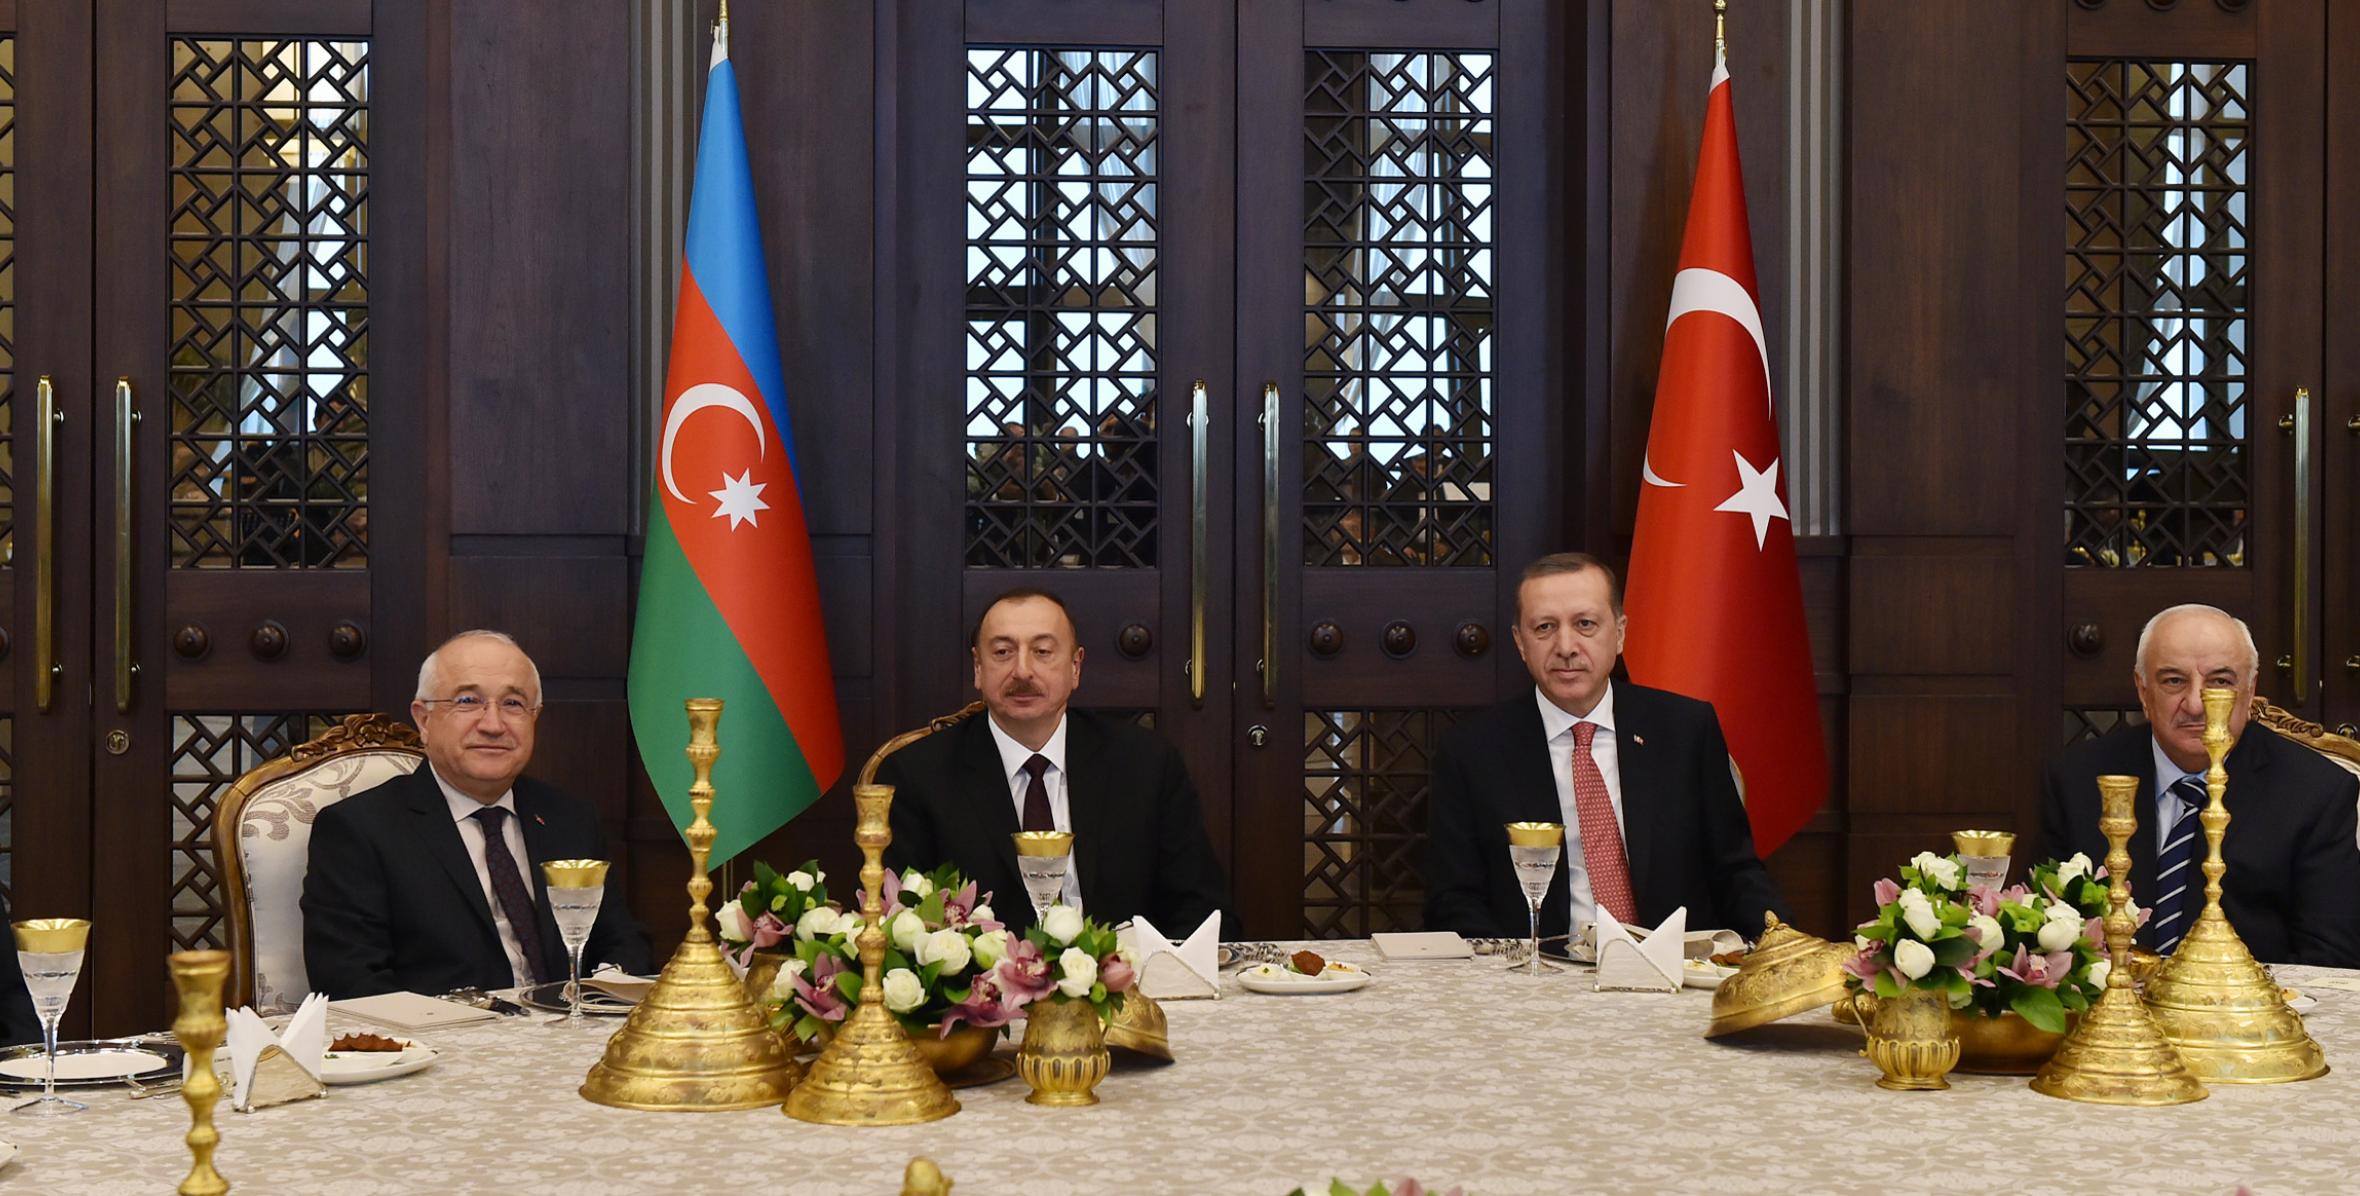 Presidents of Azerbaijan and Turkey had a joint dinner